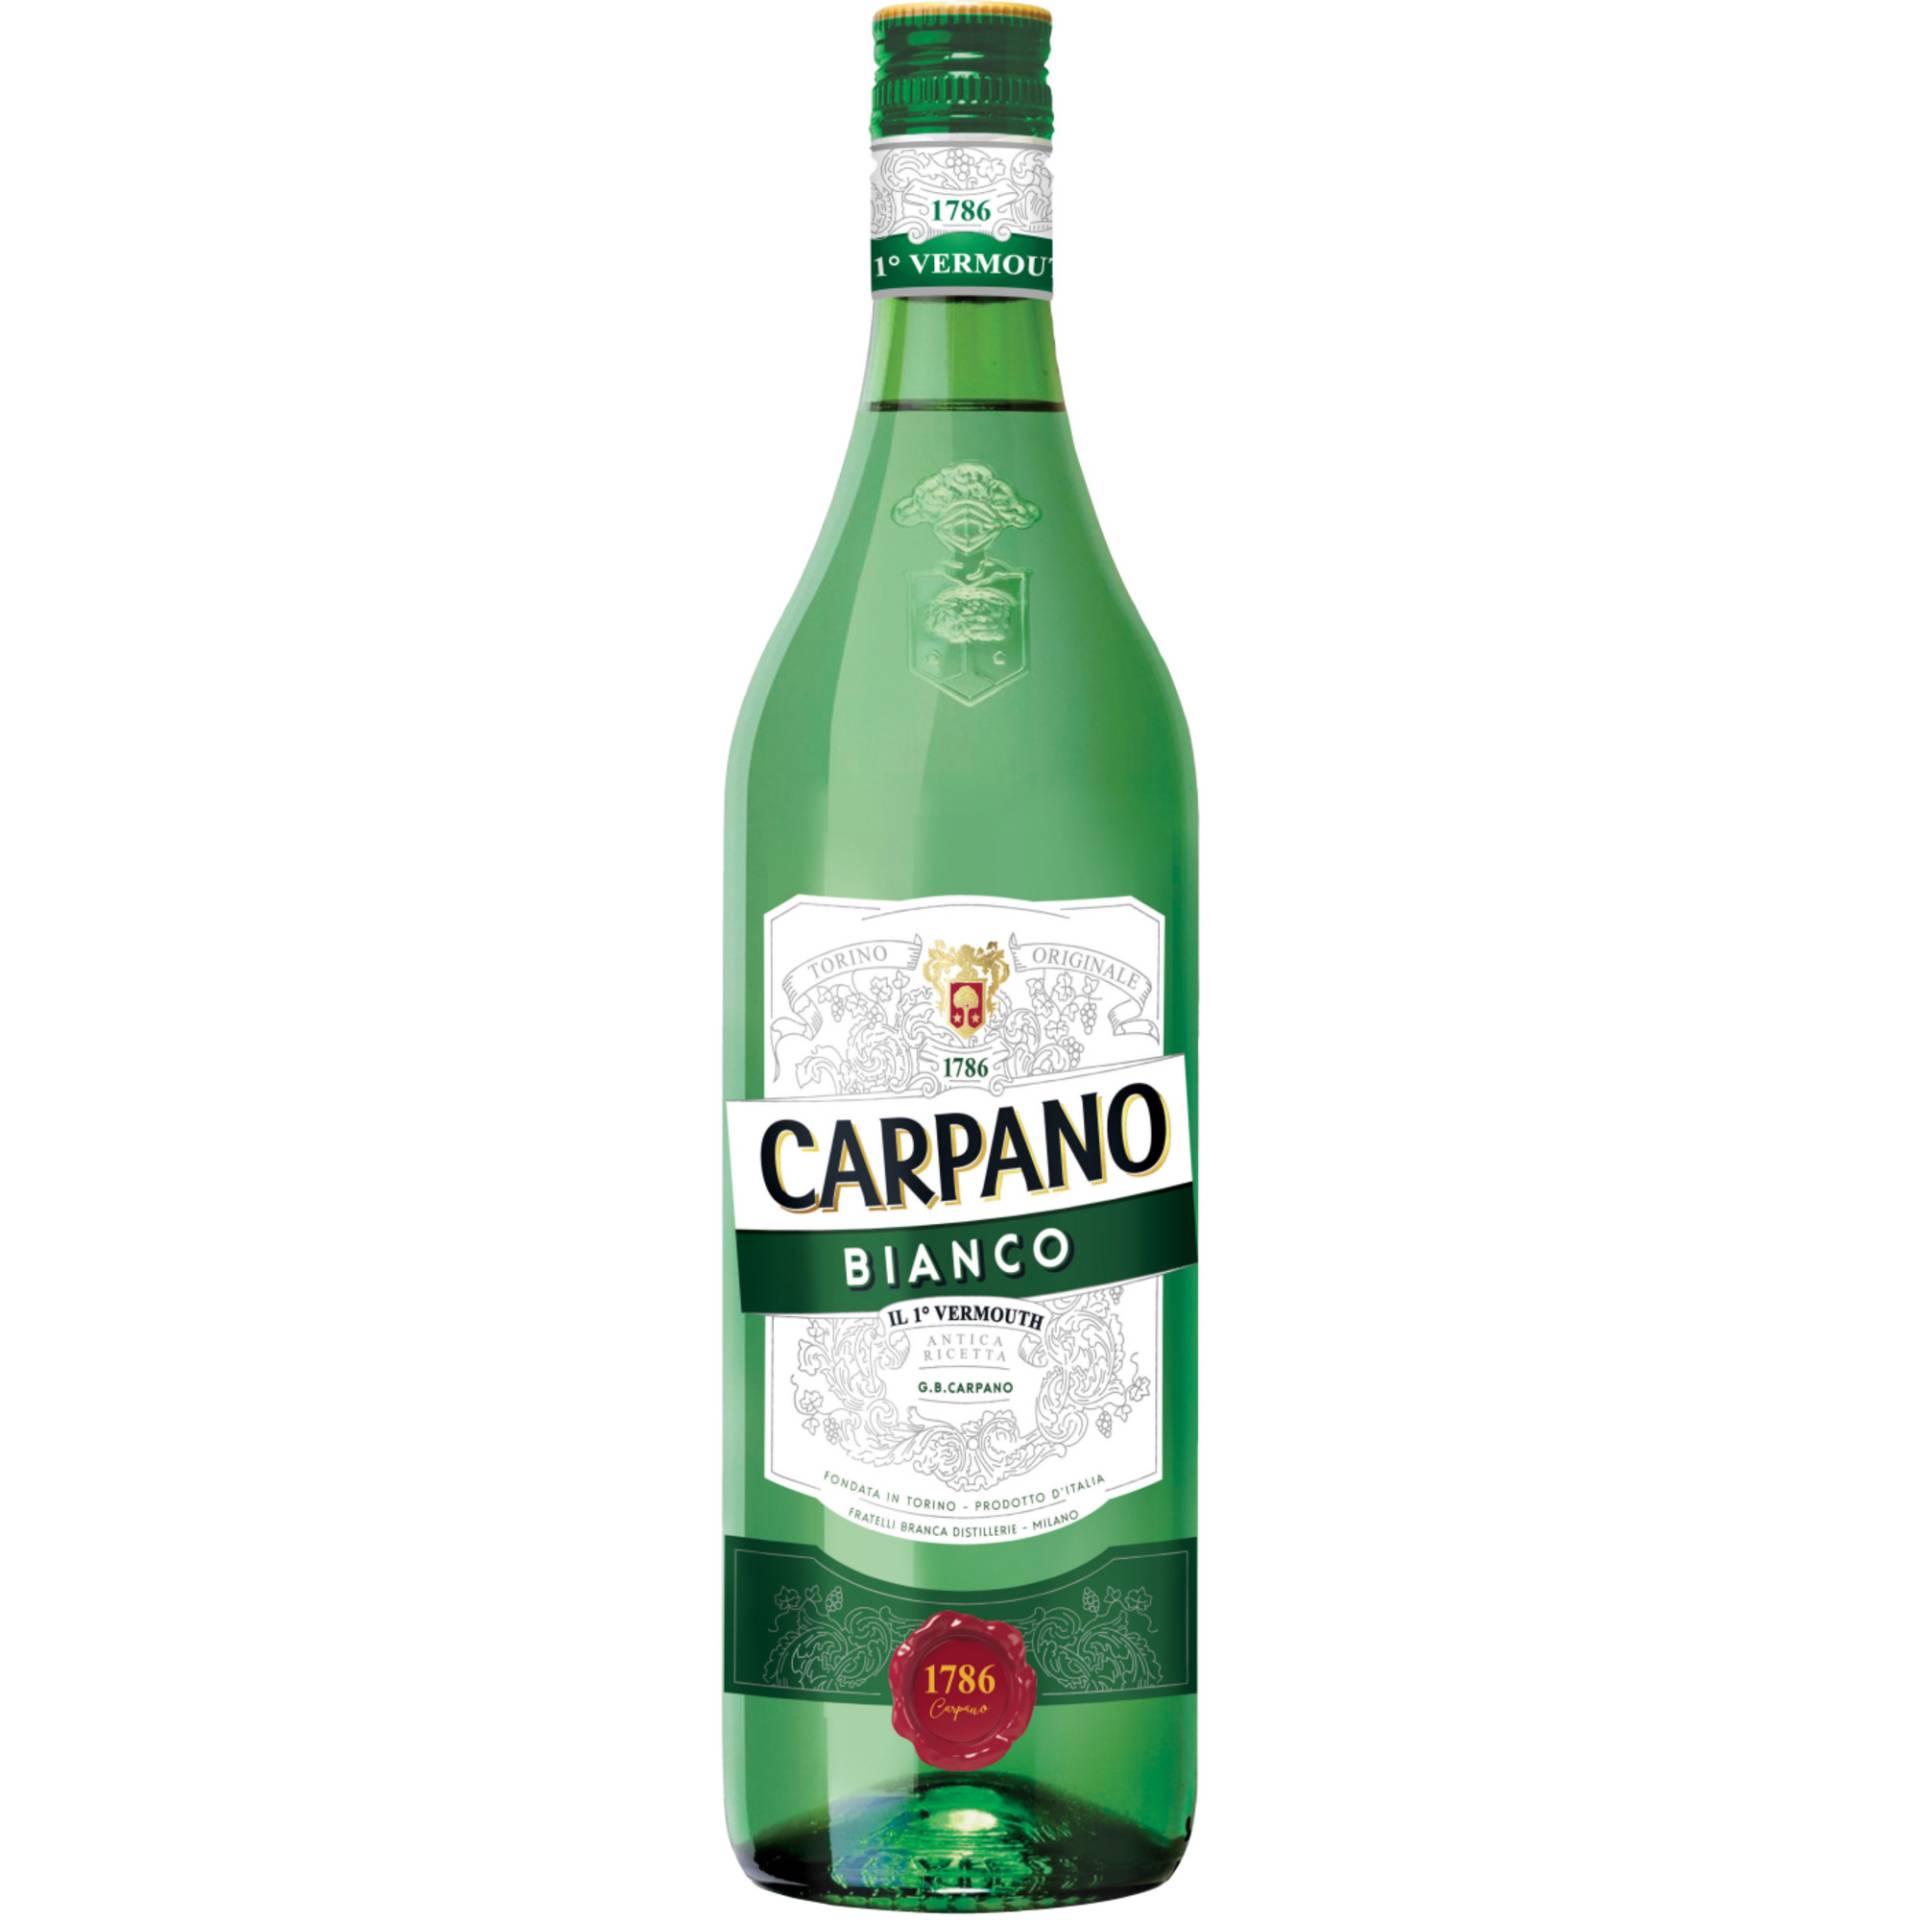 Carpano Bianco Vermouth, Italien, 0,75 L, 14,9% Vol., Spirituosen von Fratelli Branca Distillerie S.r.l., Via Resegone 2 20159 Milano Italien